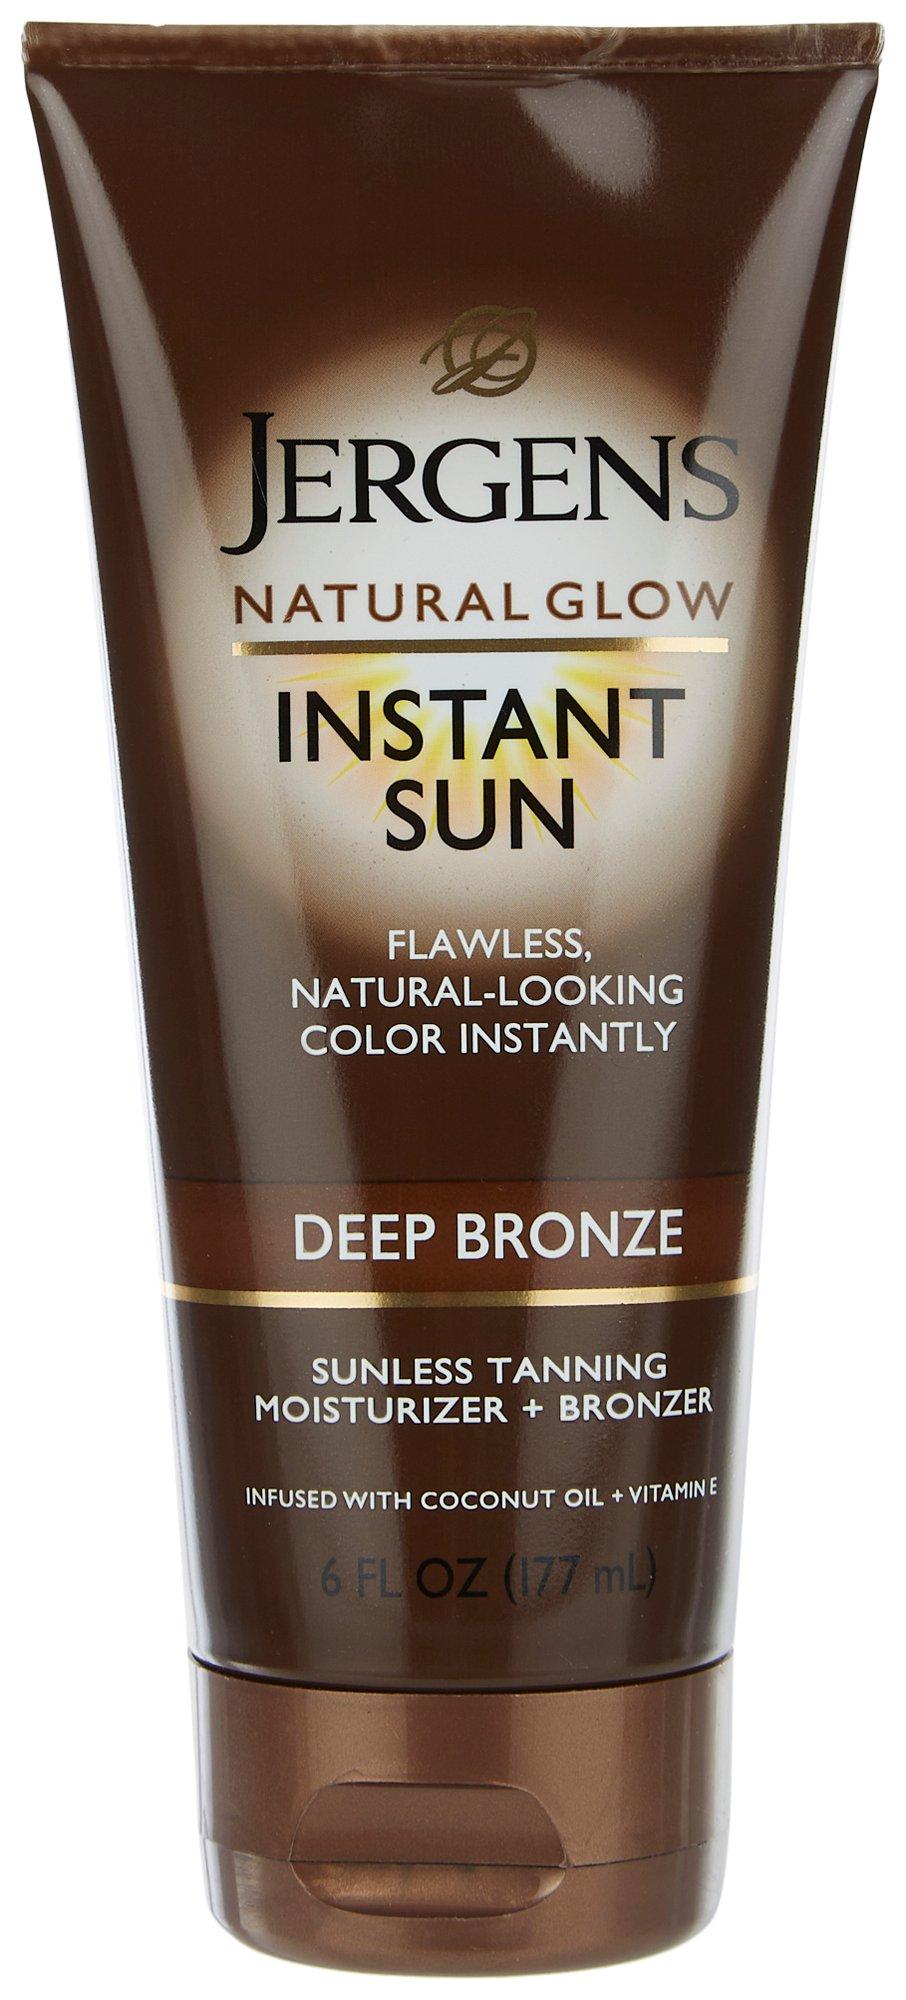 Deep Bronze Sunless Tanning Moisturizer + Bronzer